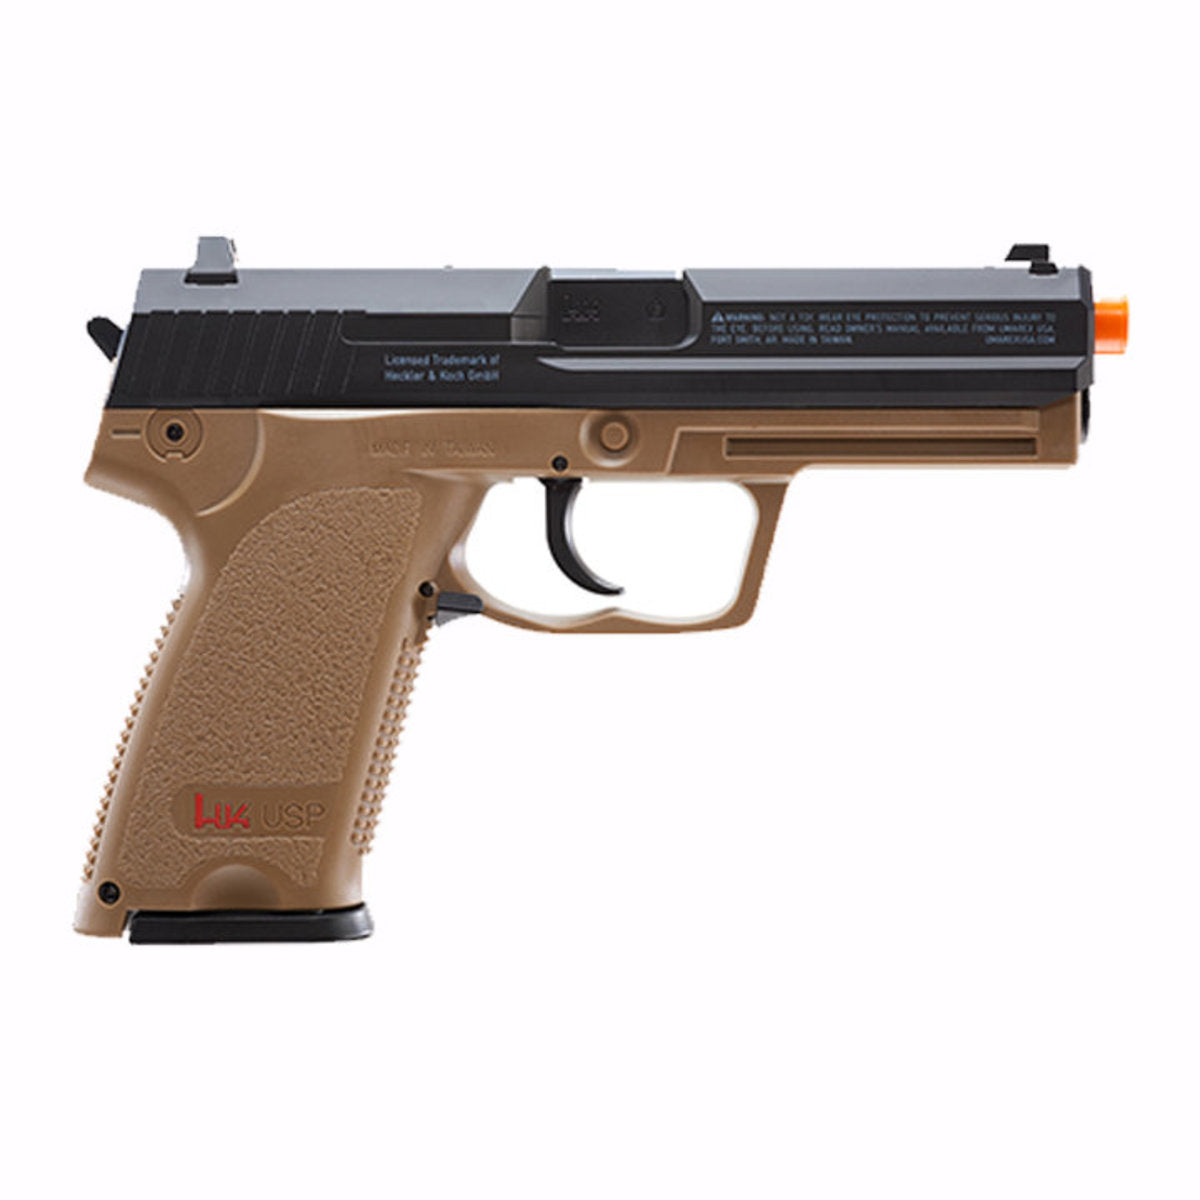 H&K USP Compact pistol replica - shop Gunfire